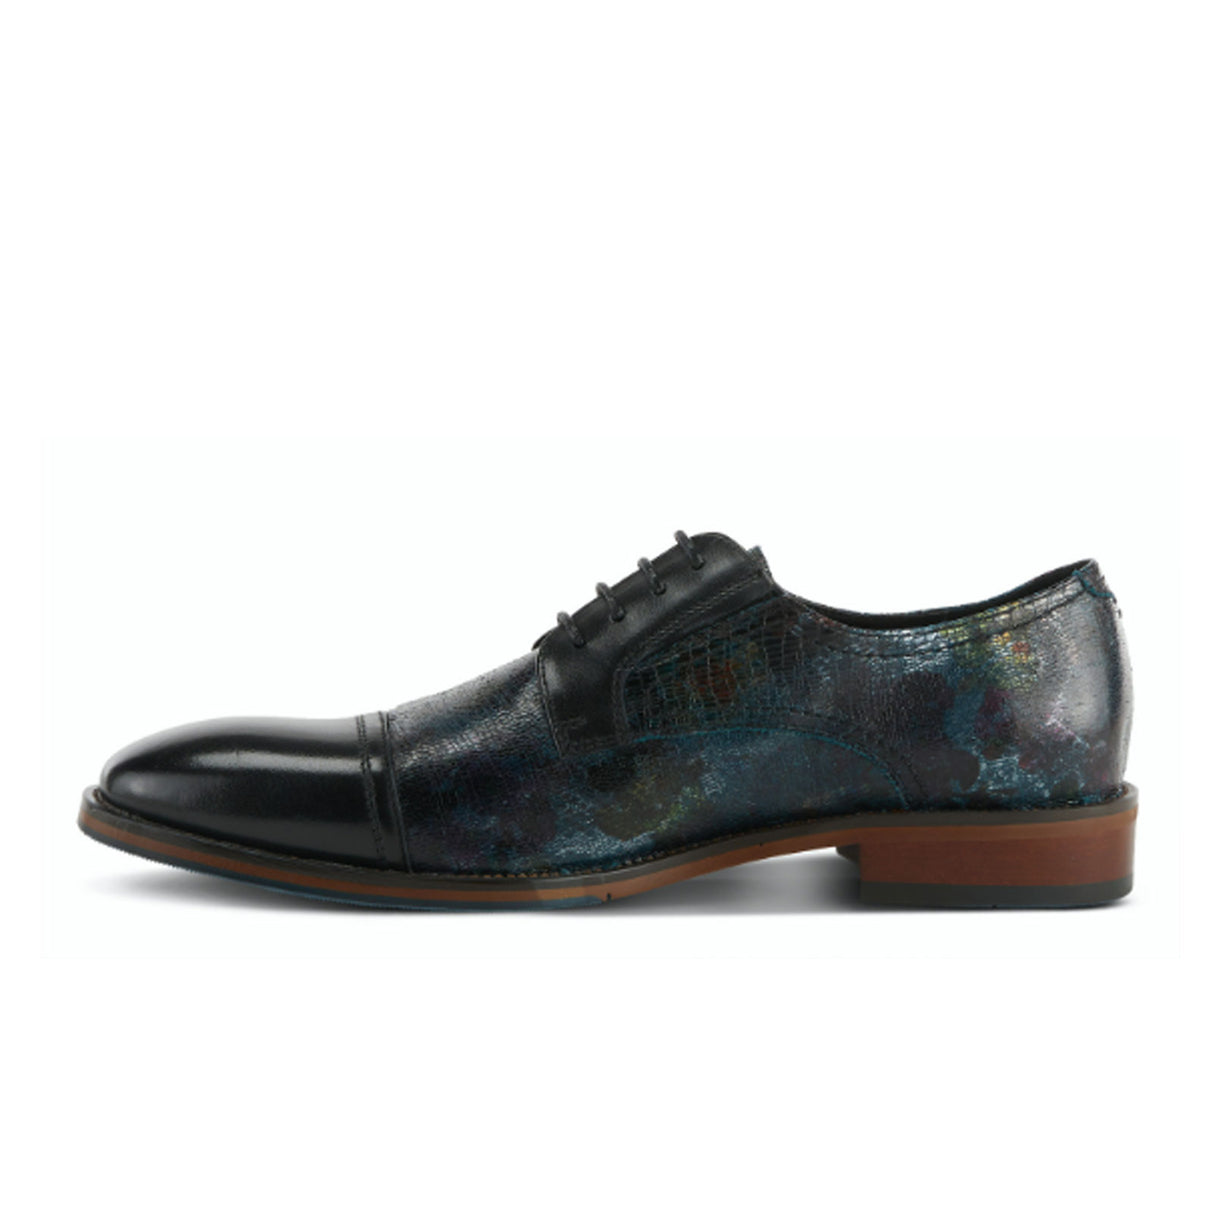 L'Artiste Yoders Oxford (Men) - Black Multi Dress-Casual - Oxfords - The Heel Shoe Fitters